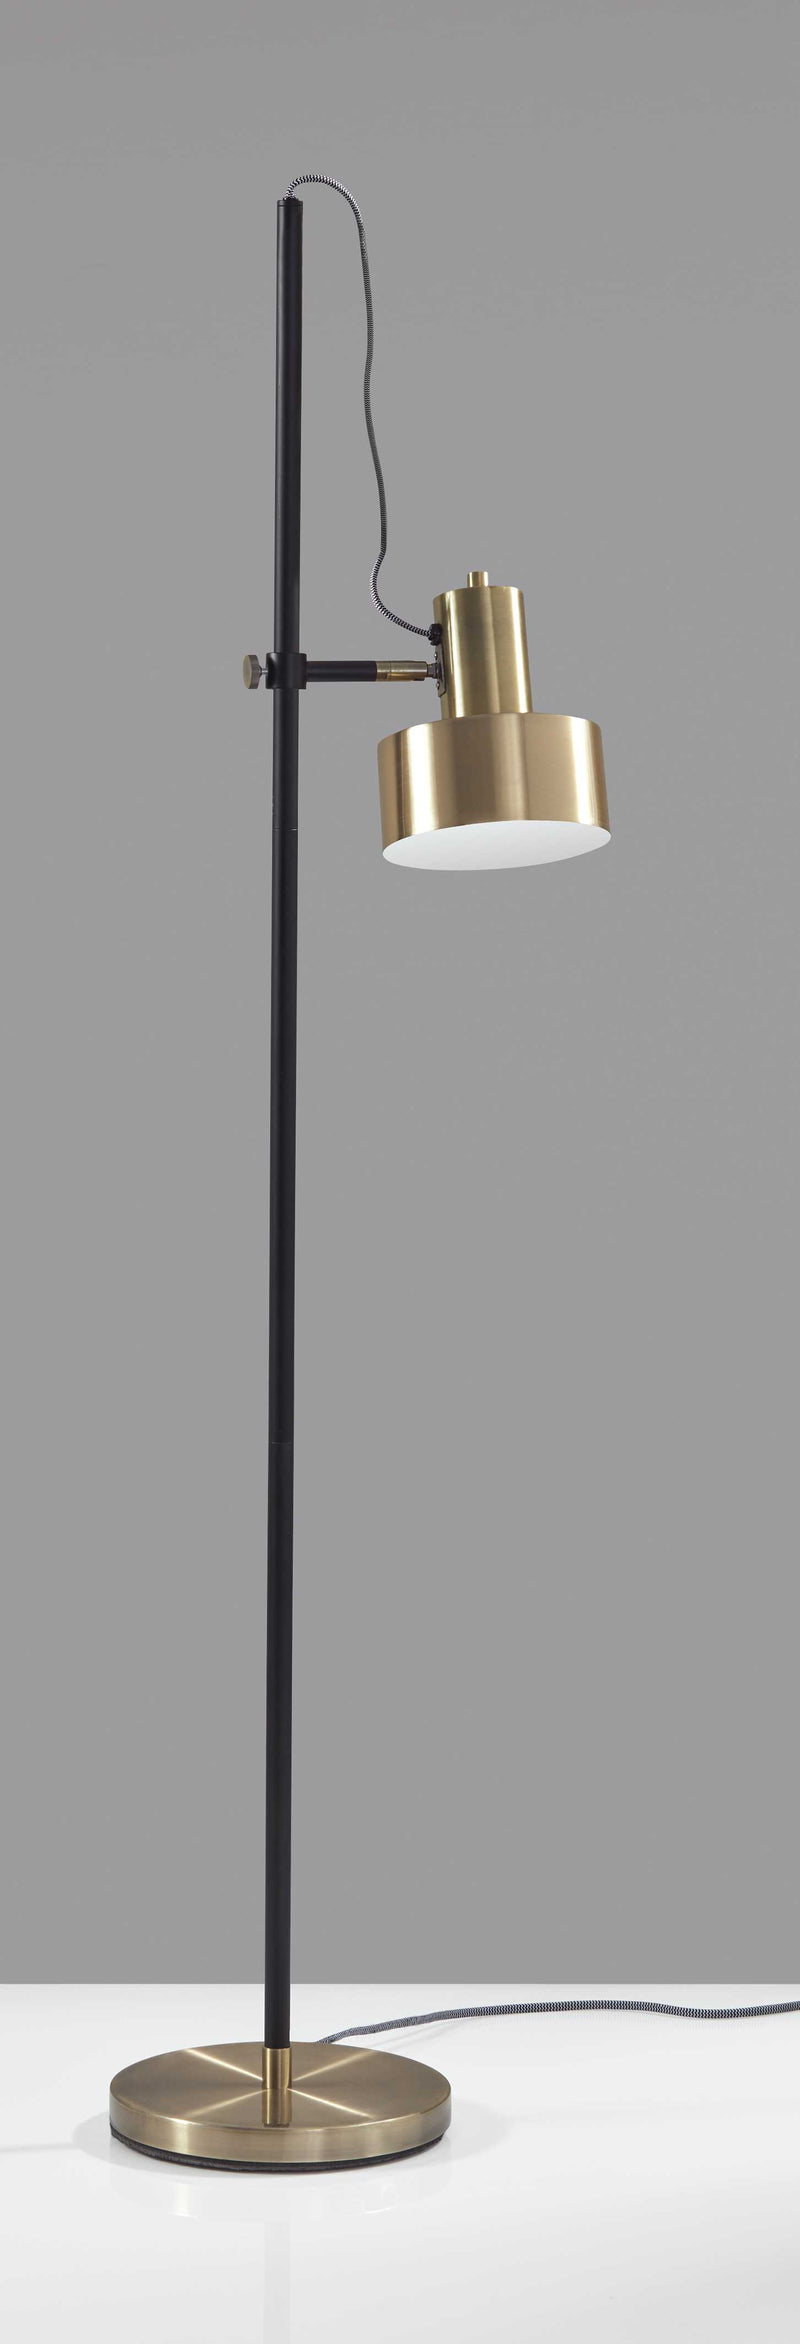 Retro Floor Lamp With Matte Black Pole And Adjustable Jumbo Antique Brass Metal Shade